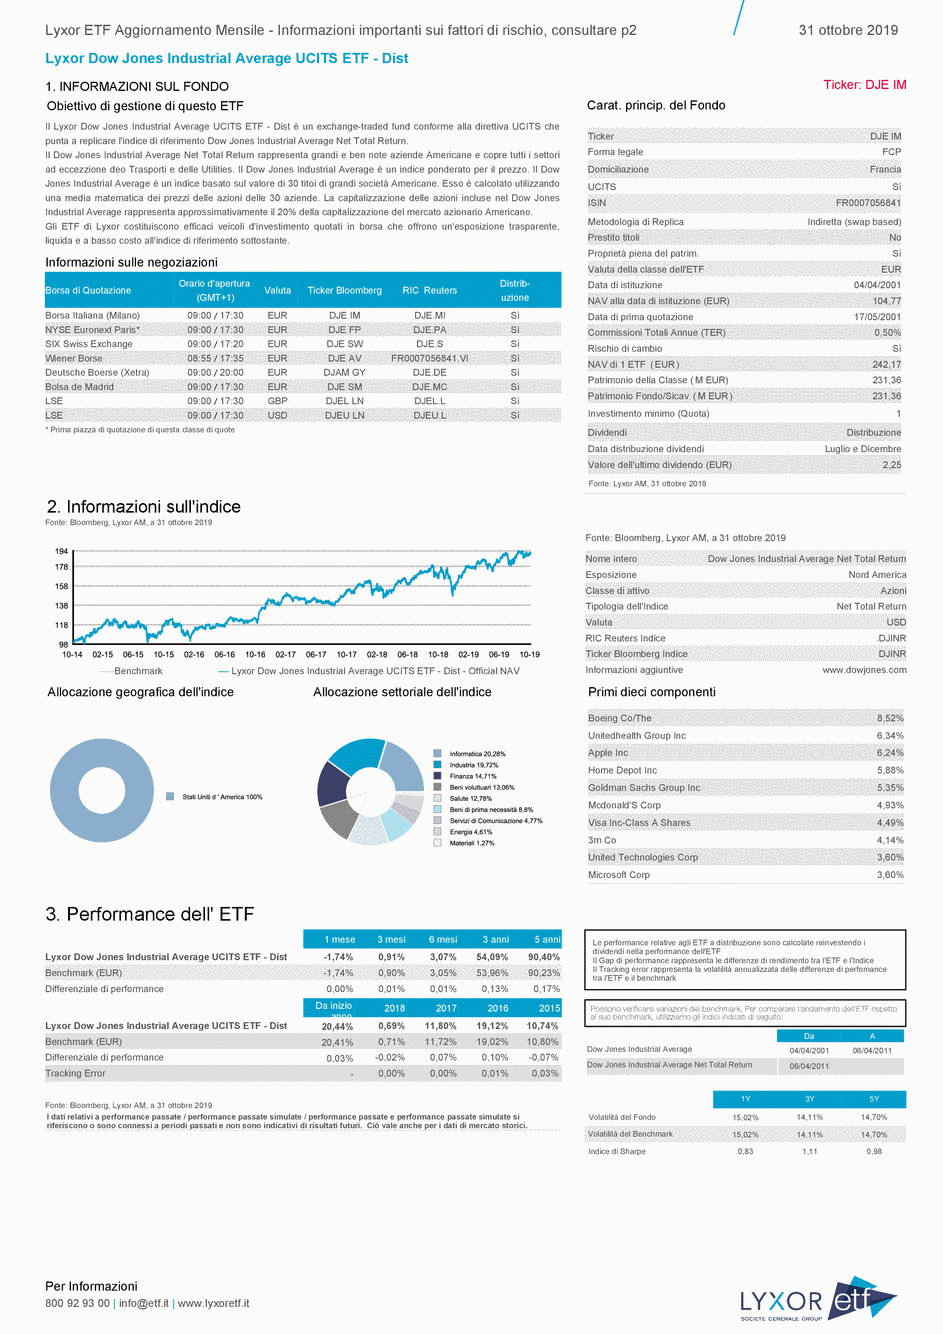 Reporting Lyxor Dow Jones Industrial Average UCITS ETF - Dist - 31/10/2019 - Italien